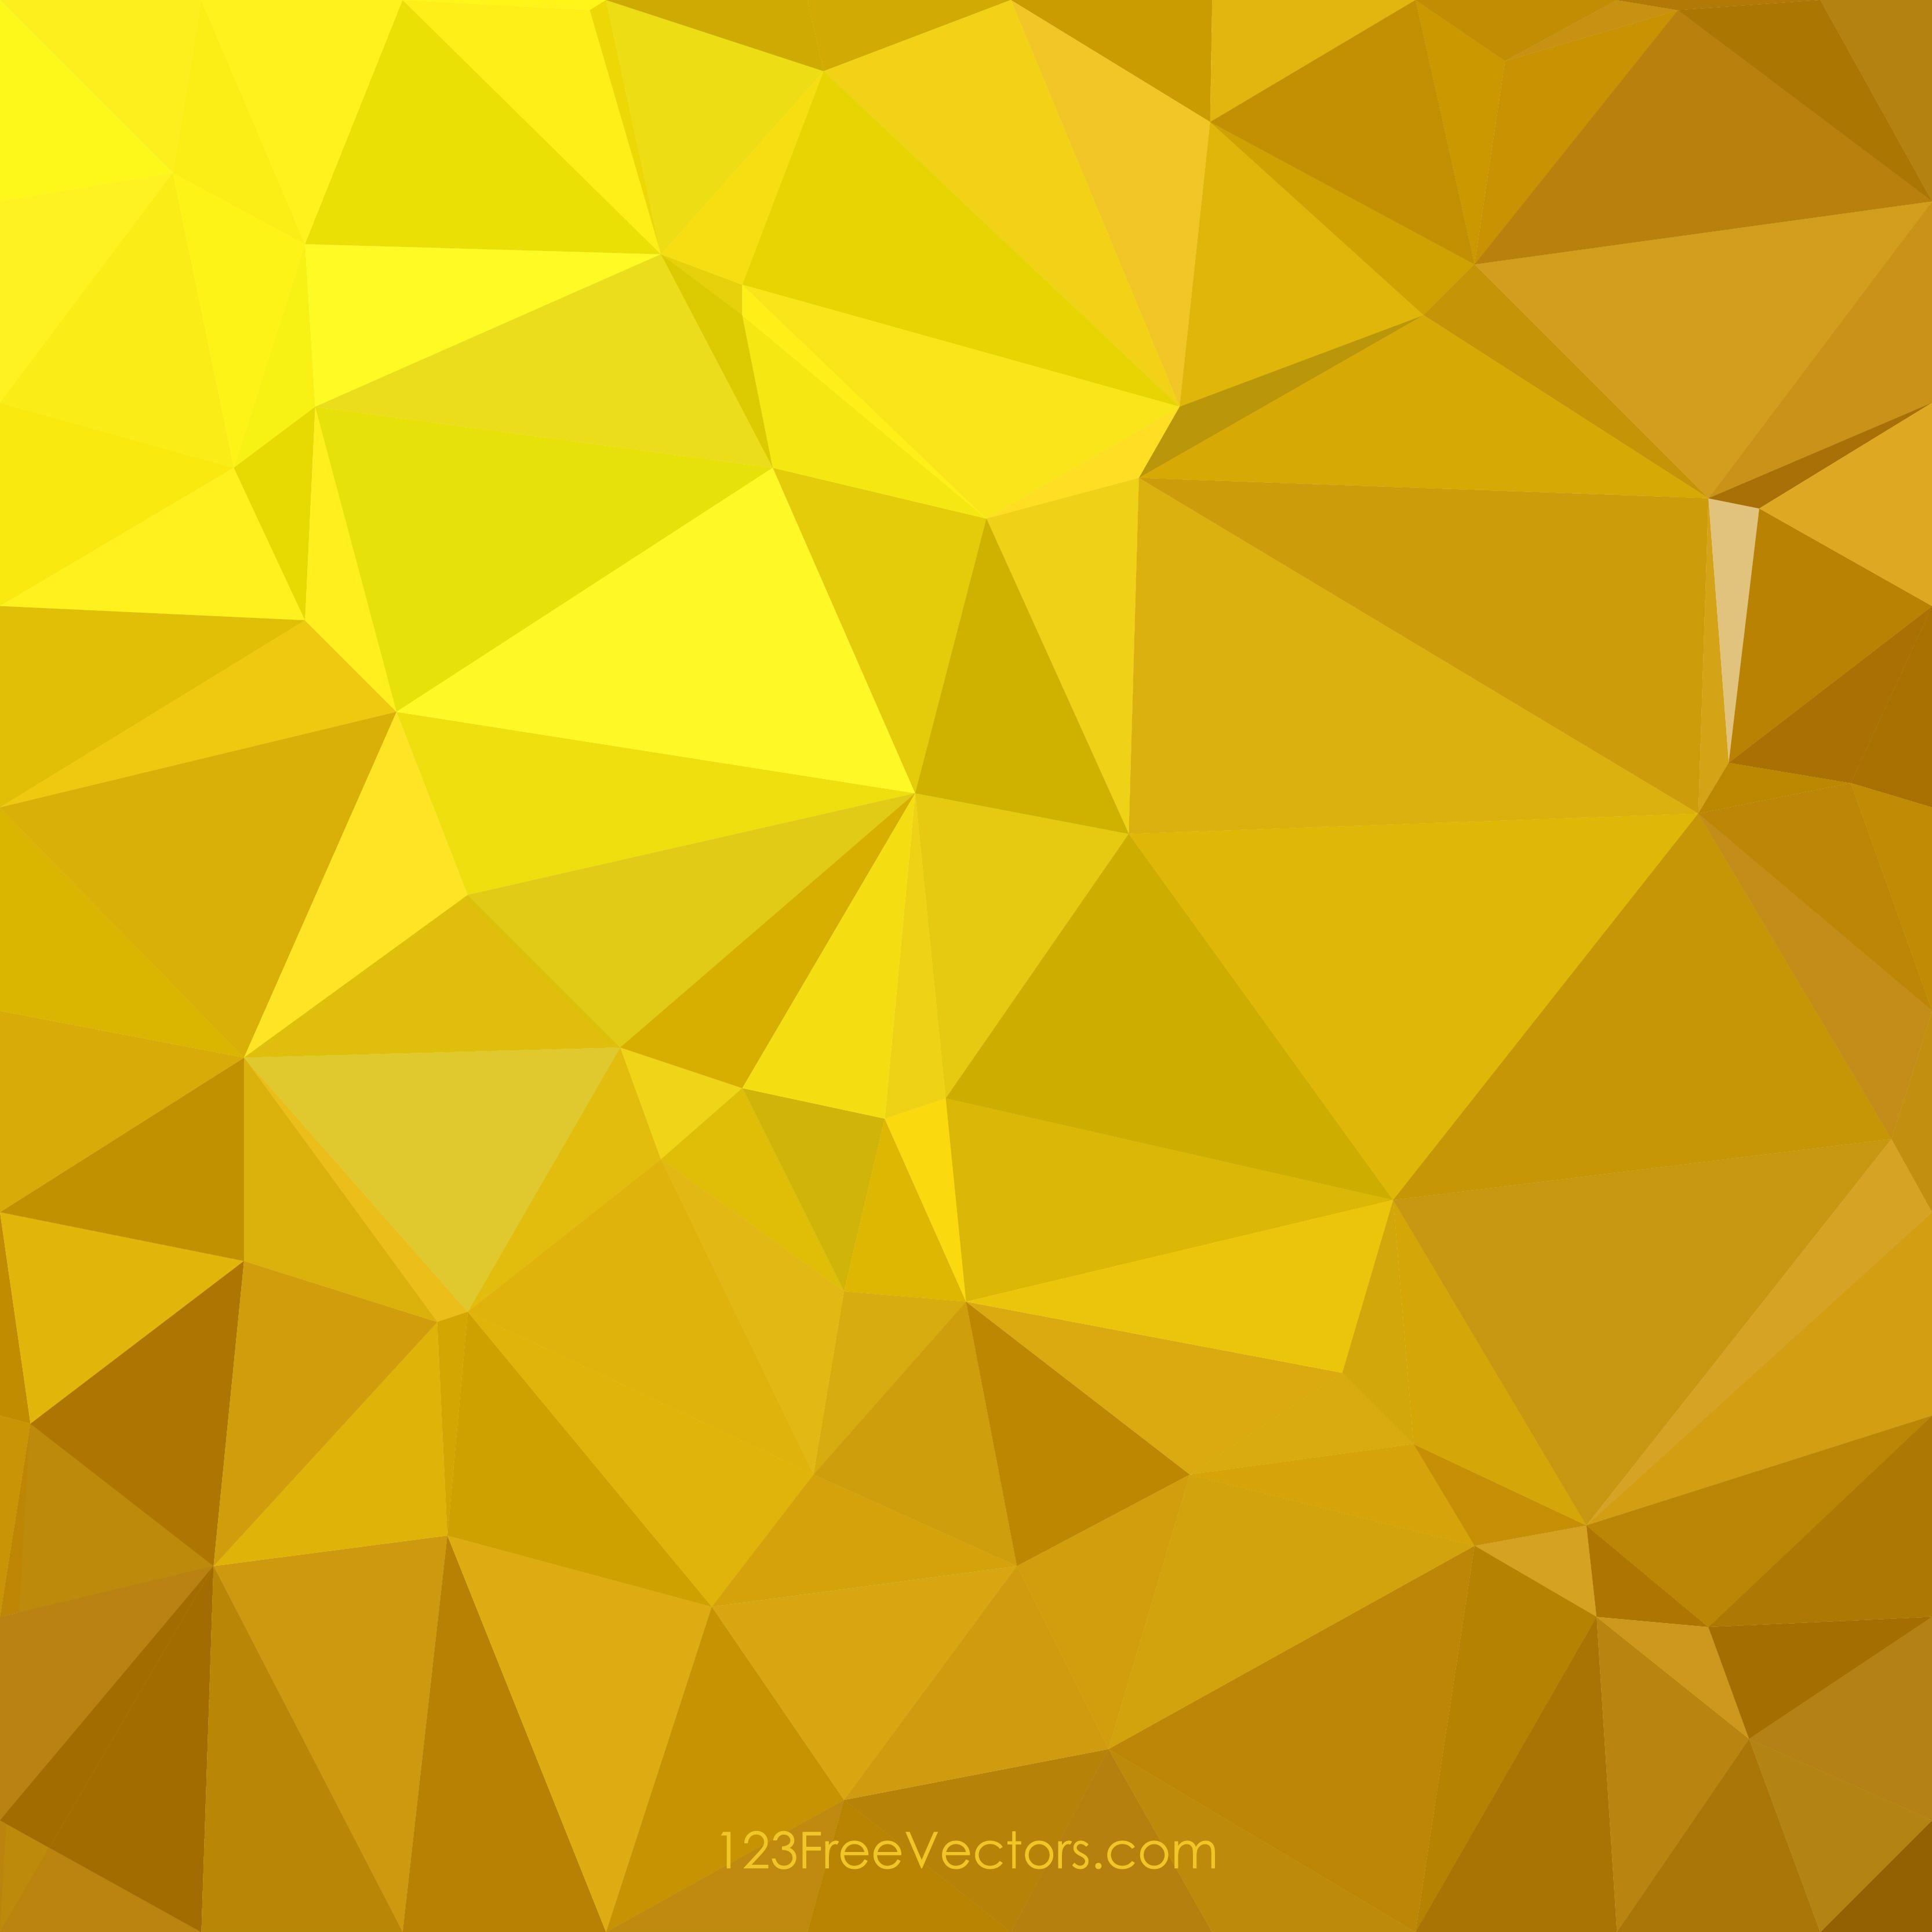 Polygonal Triangular Golden Background Clip ArtFreevectors